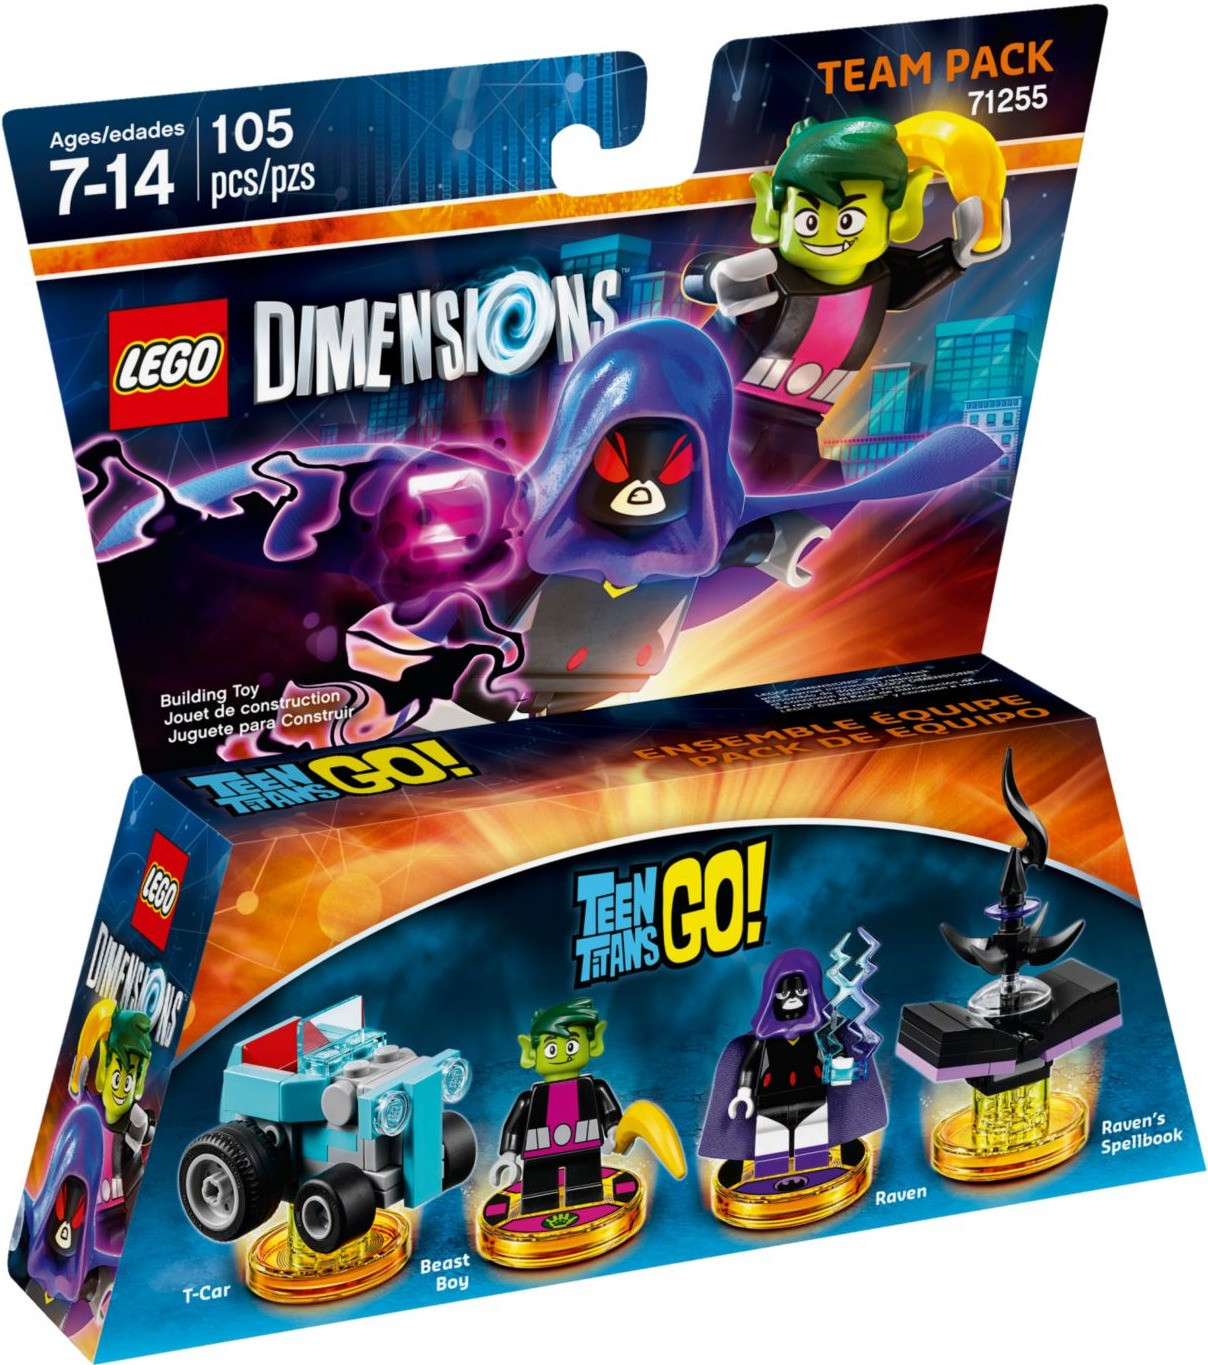 LEGO Dimensions: Team Pack - Teen Titans GO!